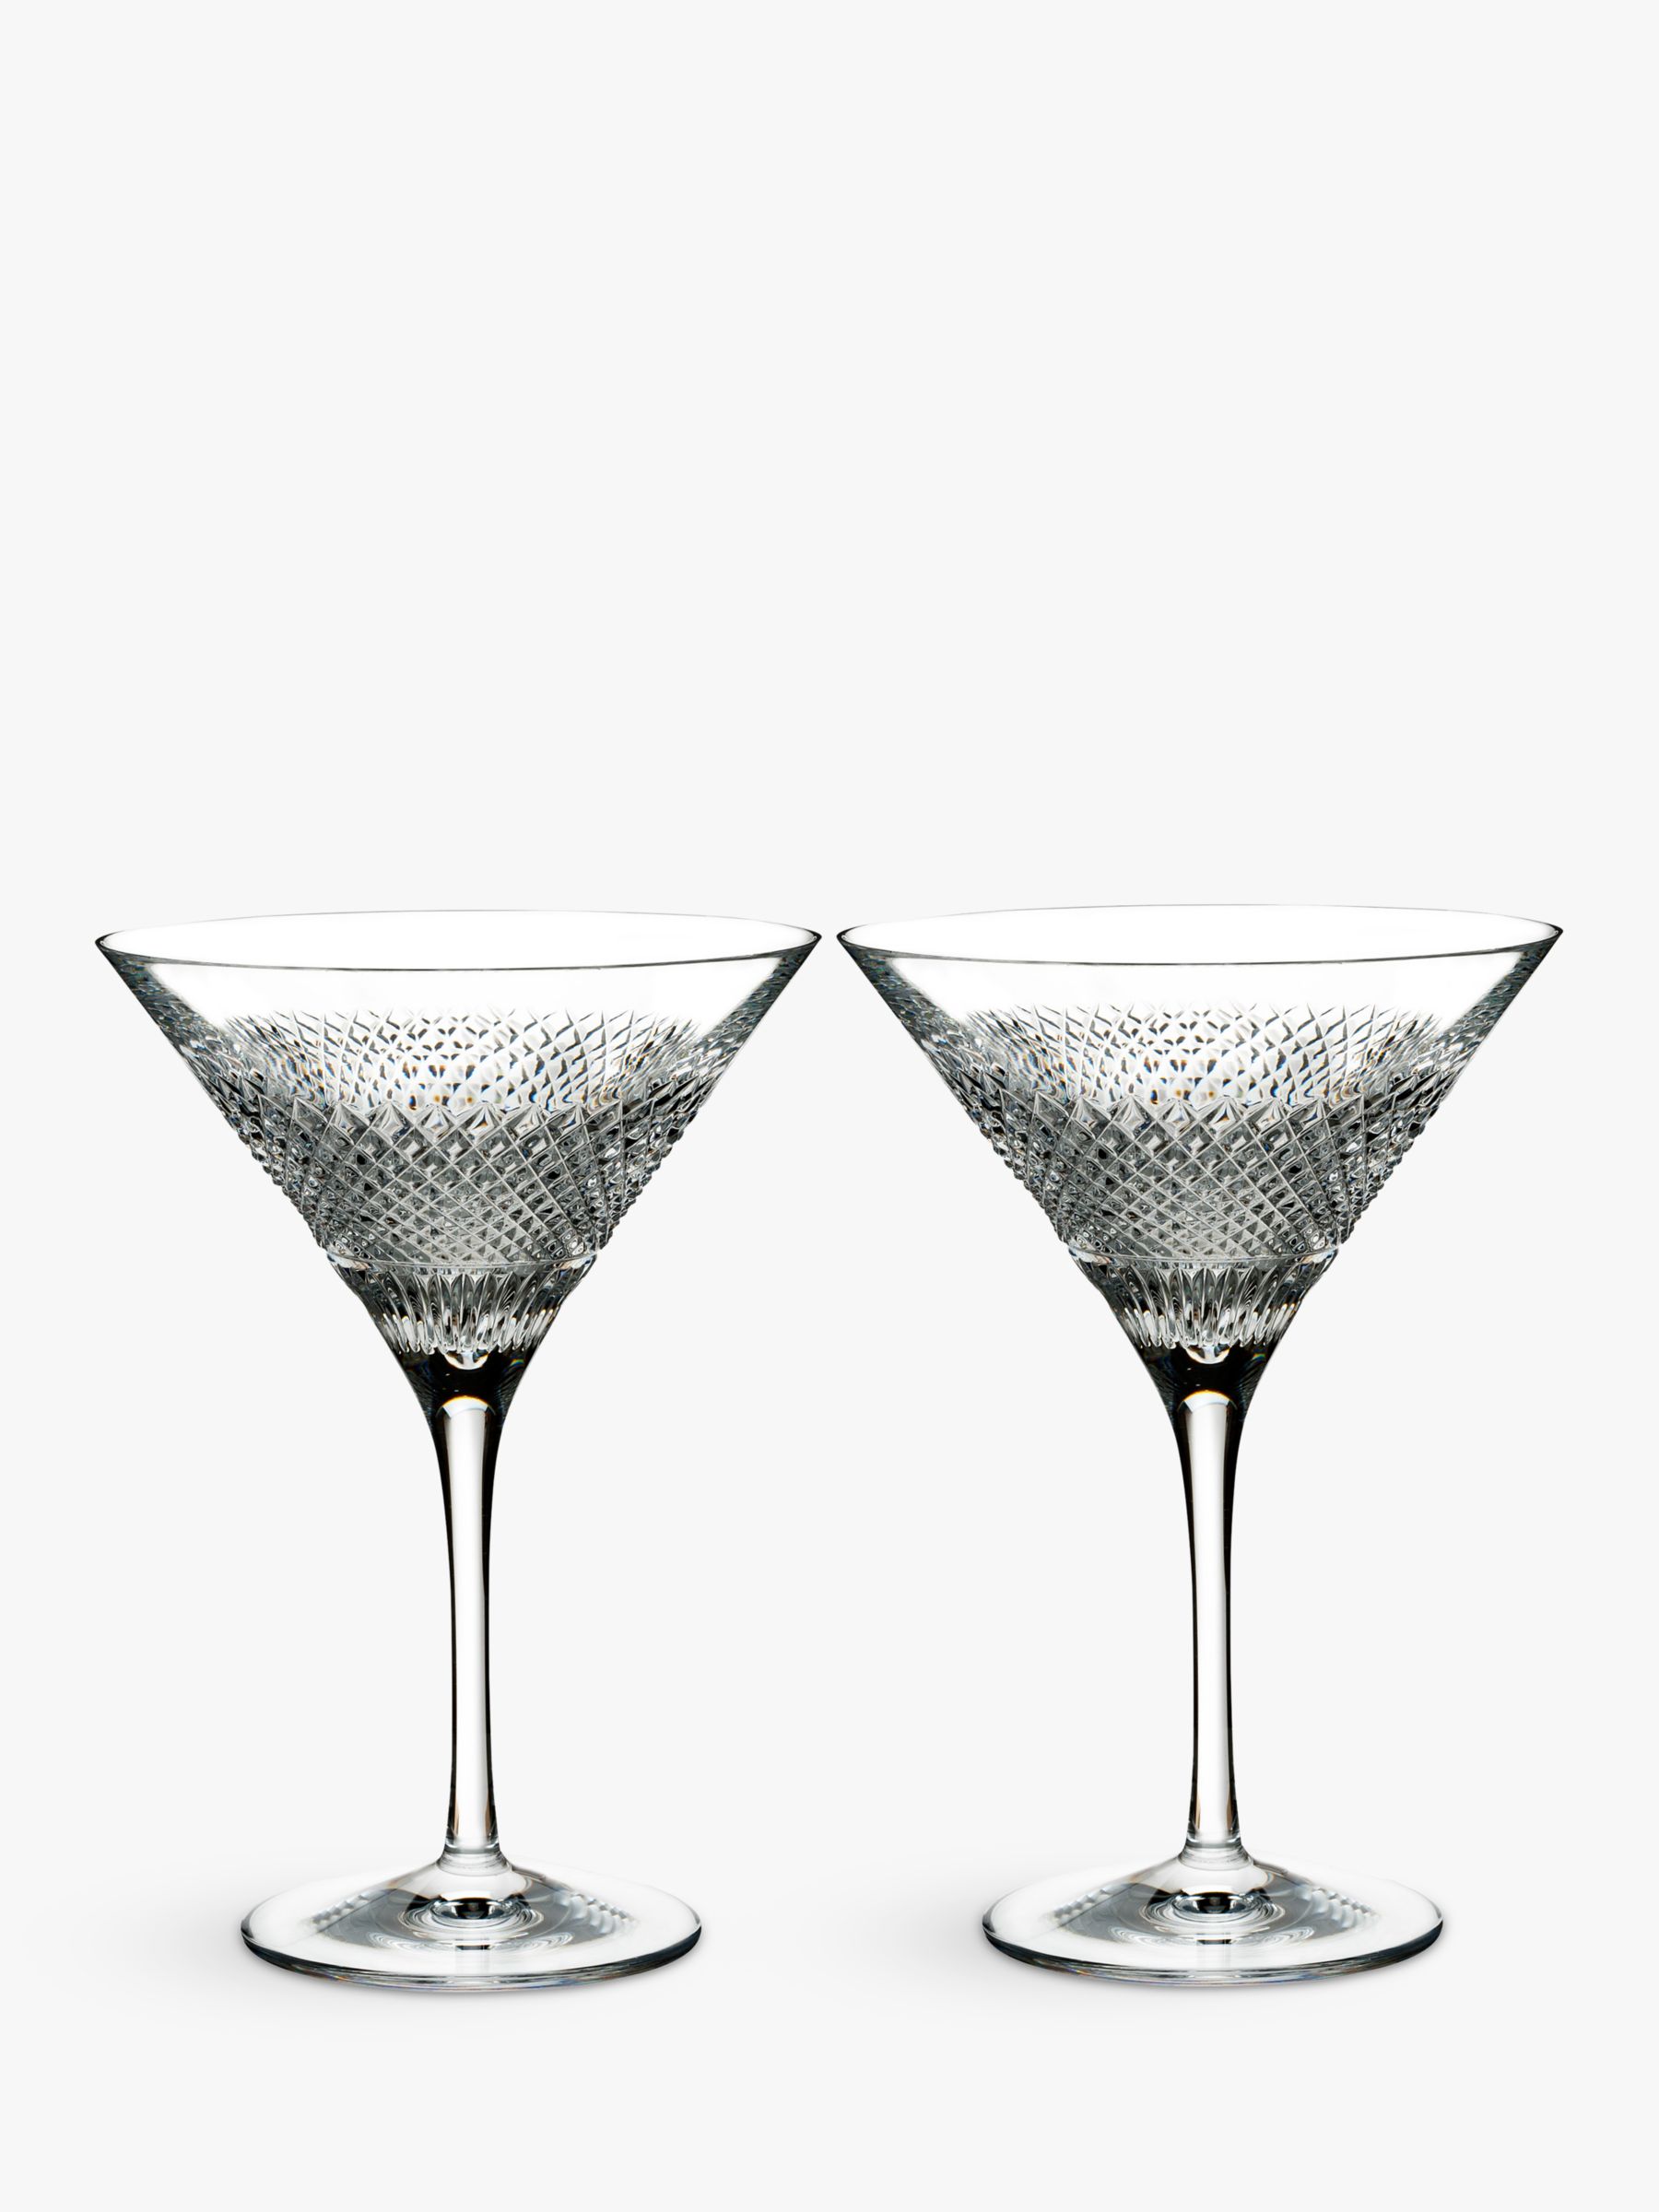 DIAMANTE Black Martini Glasses Pair of Black Crystal Martini Glasses 